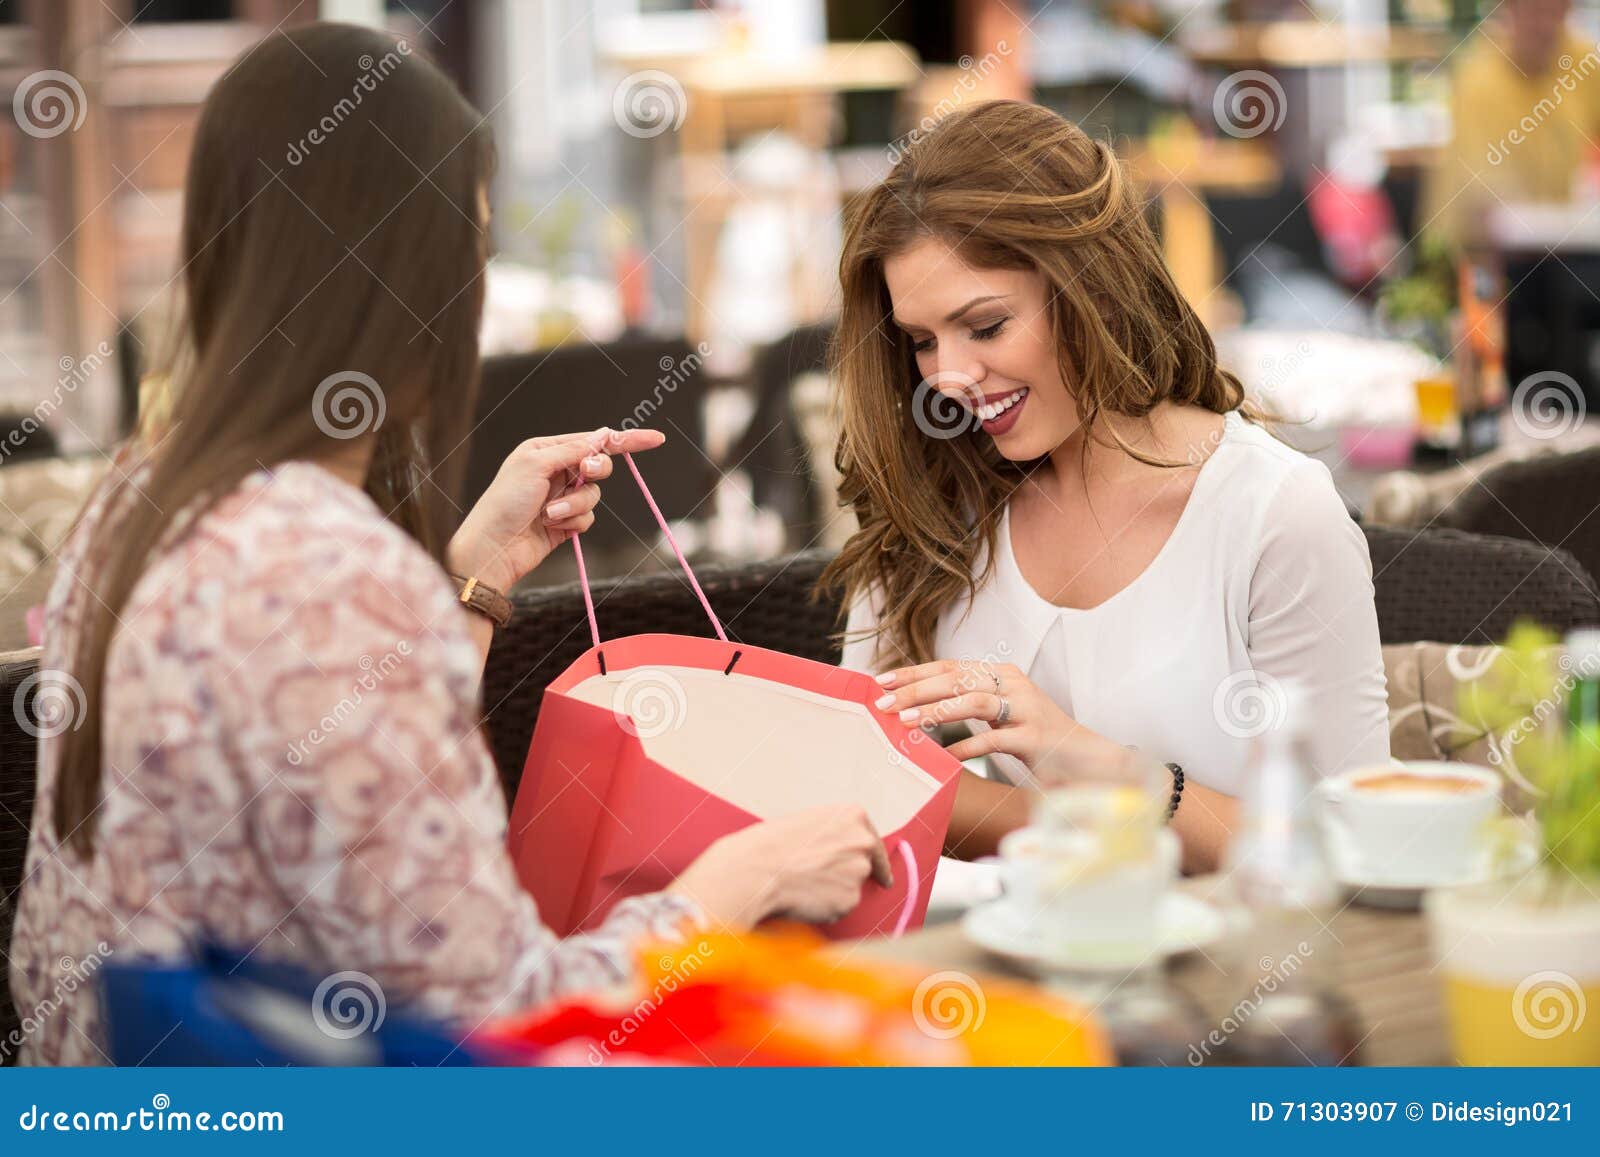 Do the shopping предложение